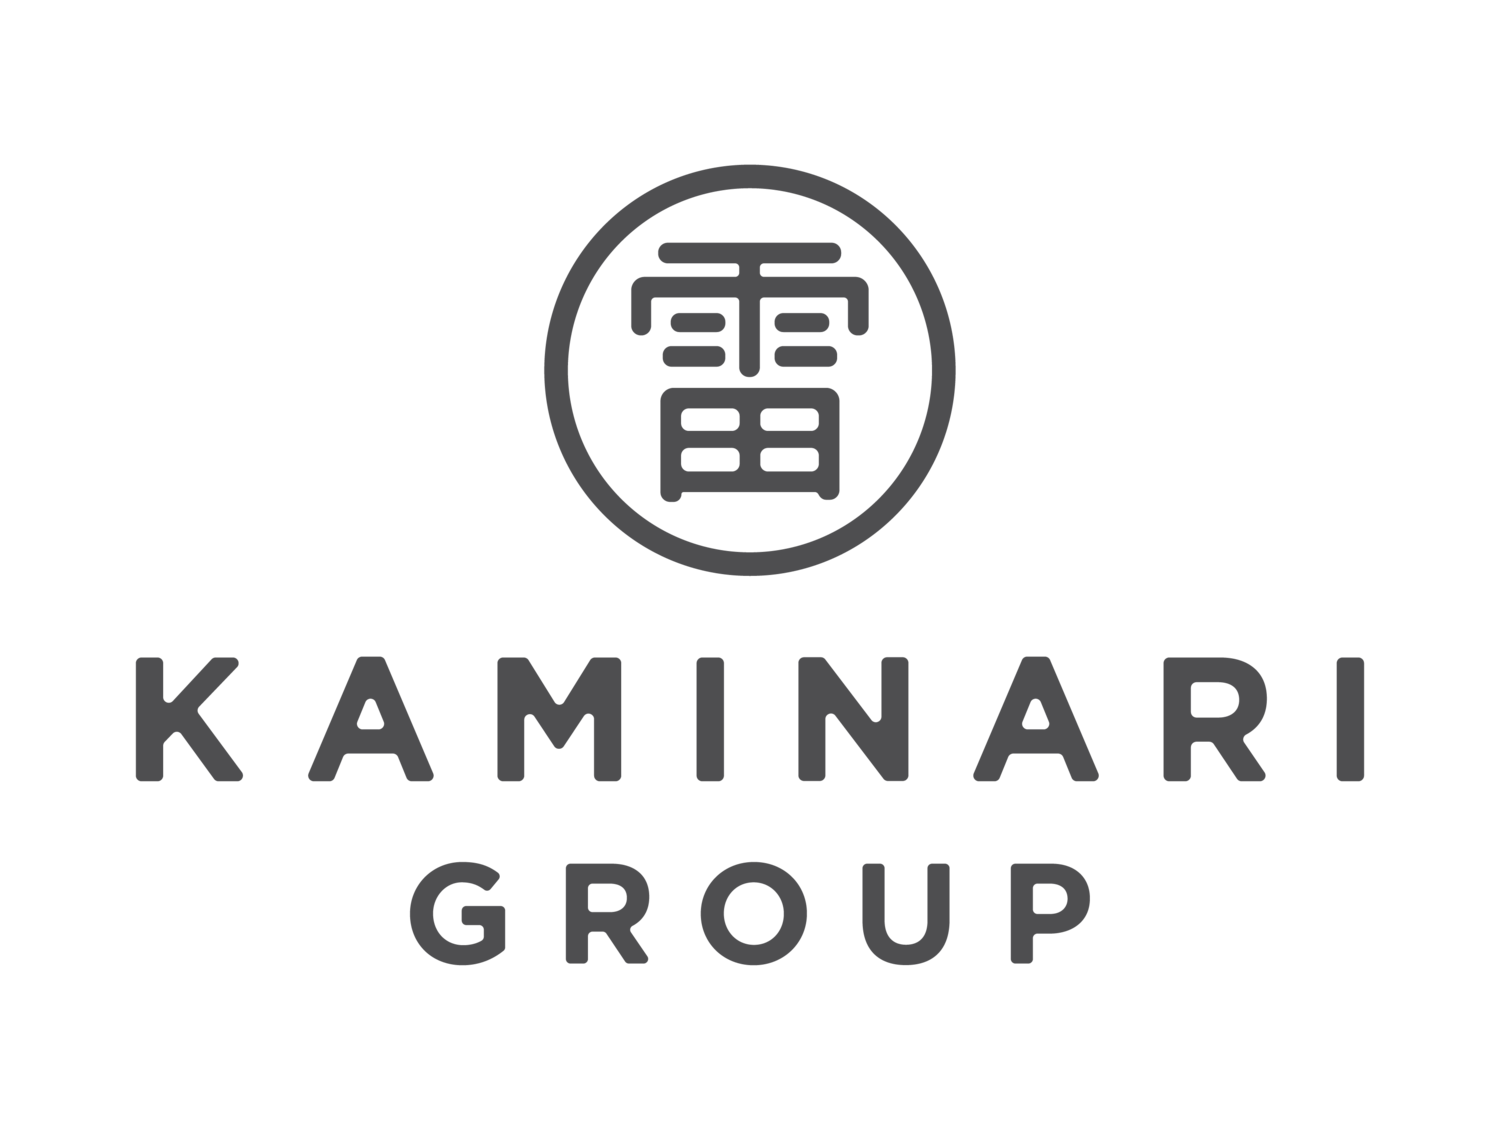 Kaminari Group